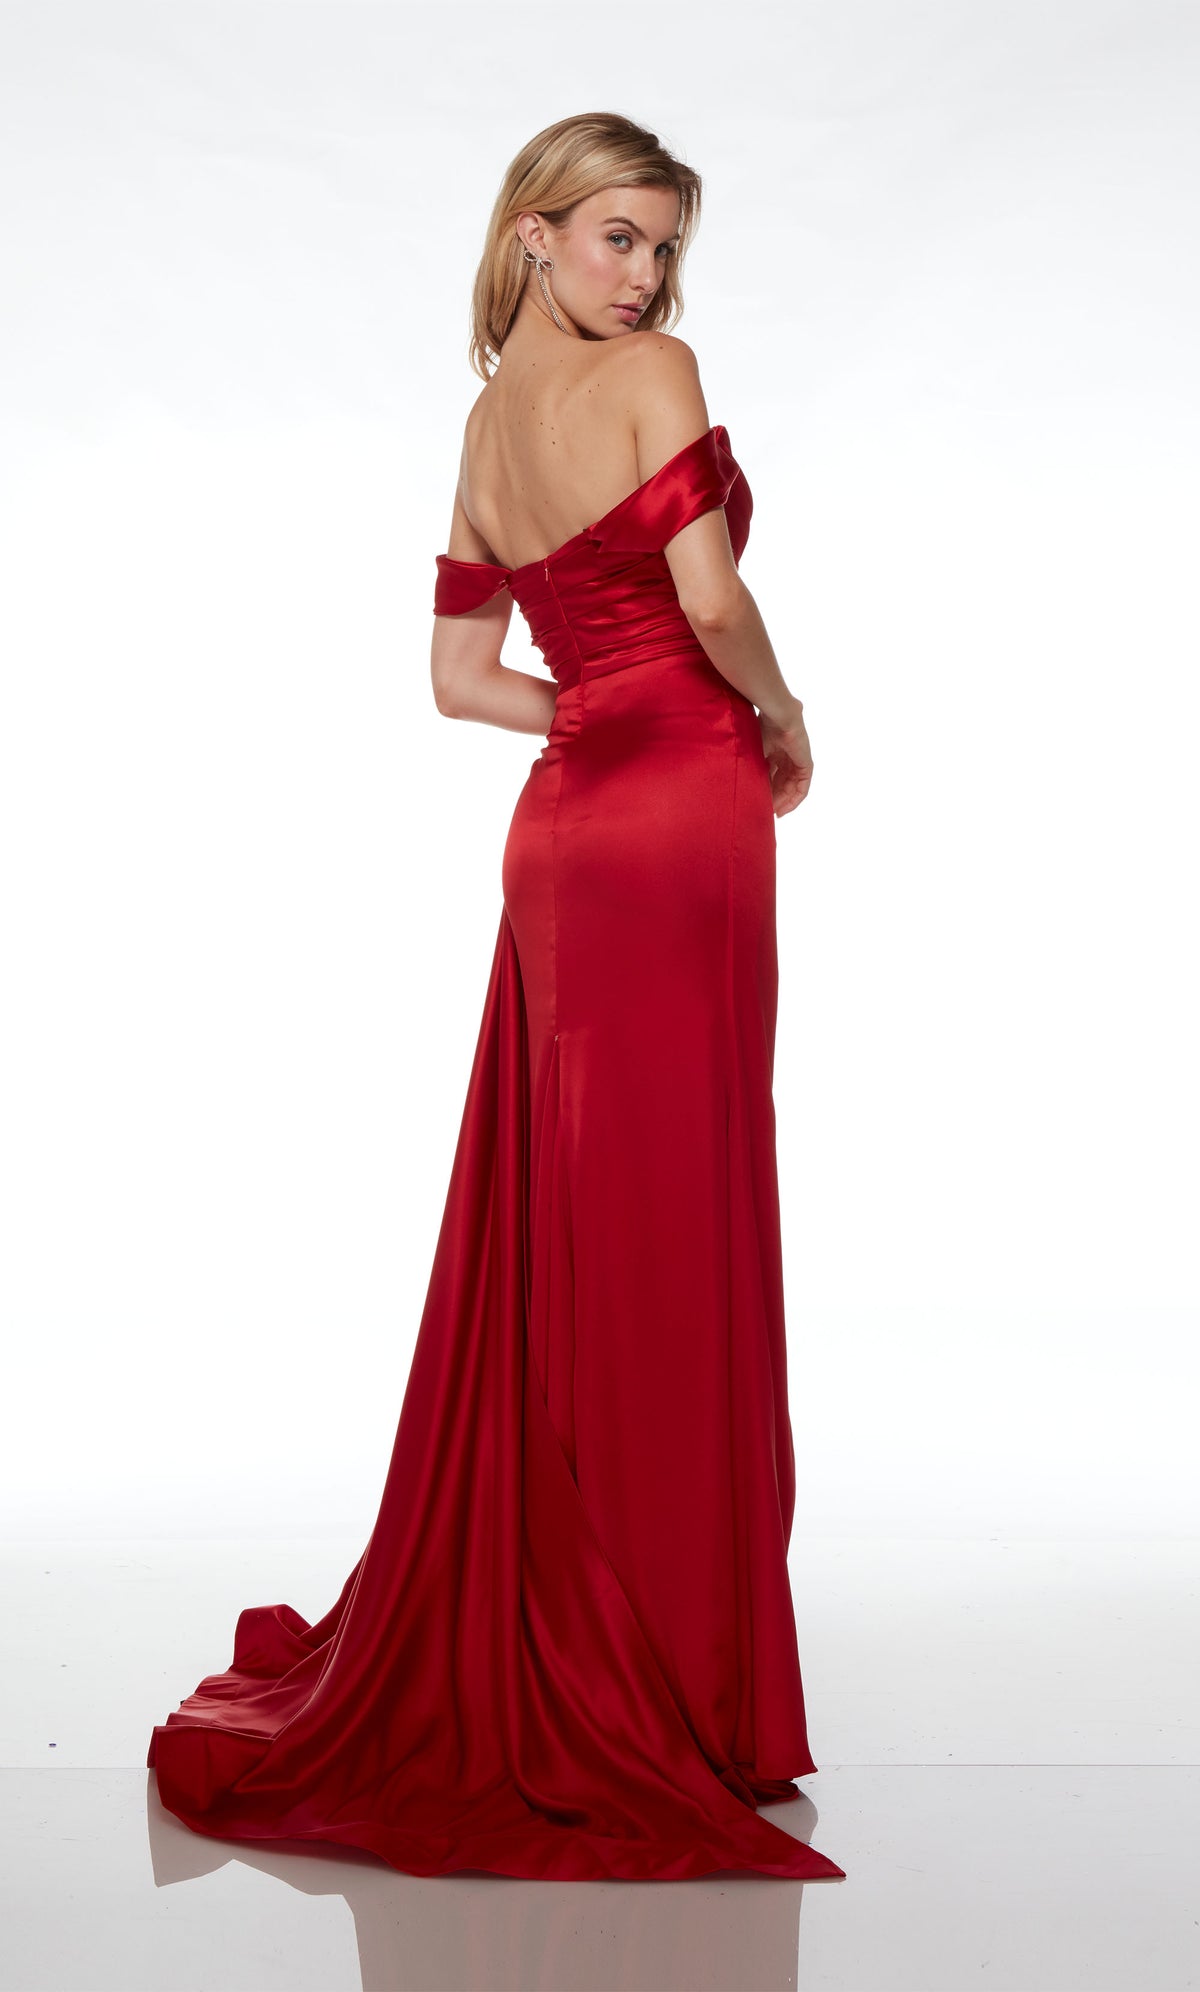 Red satin off-shoulder long formal dress: cowl neckline, gathered bodice, slit, detachable straps, side train—an chic and versatile ensemble.